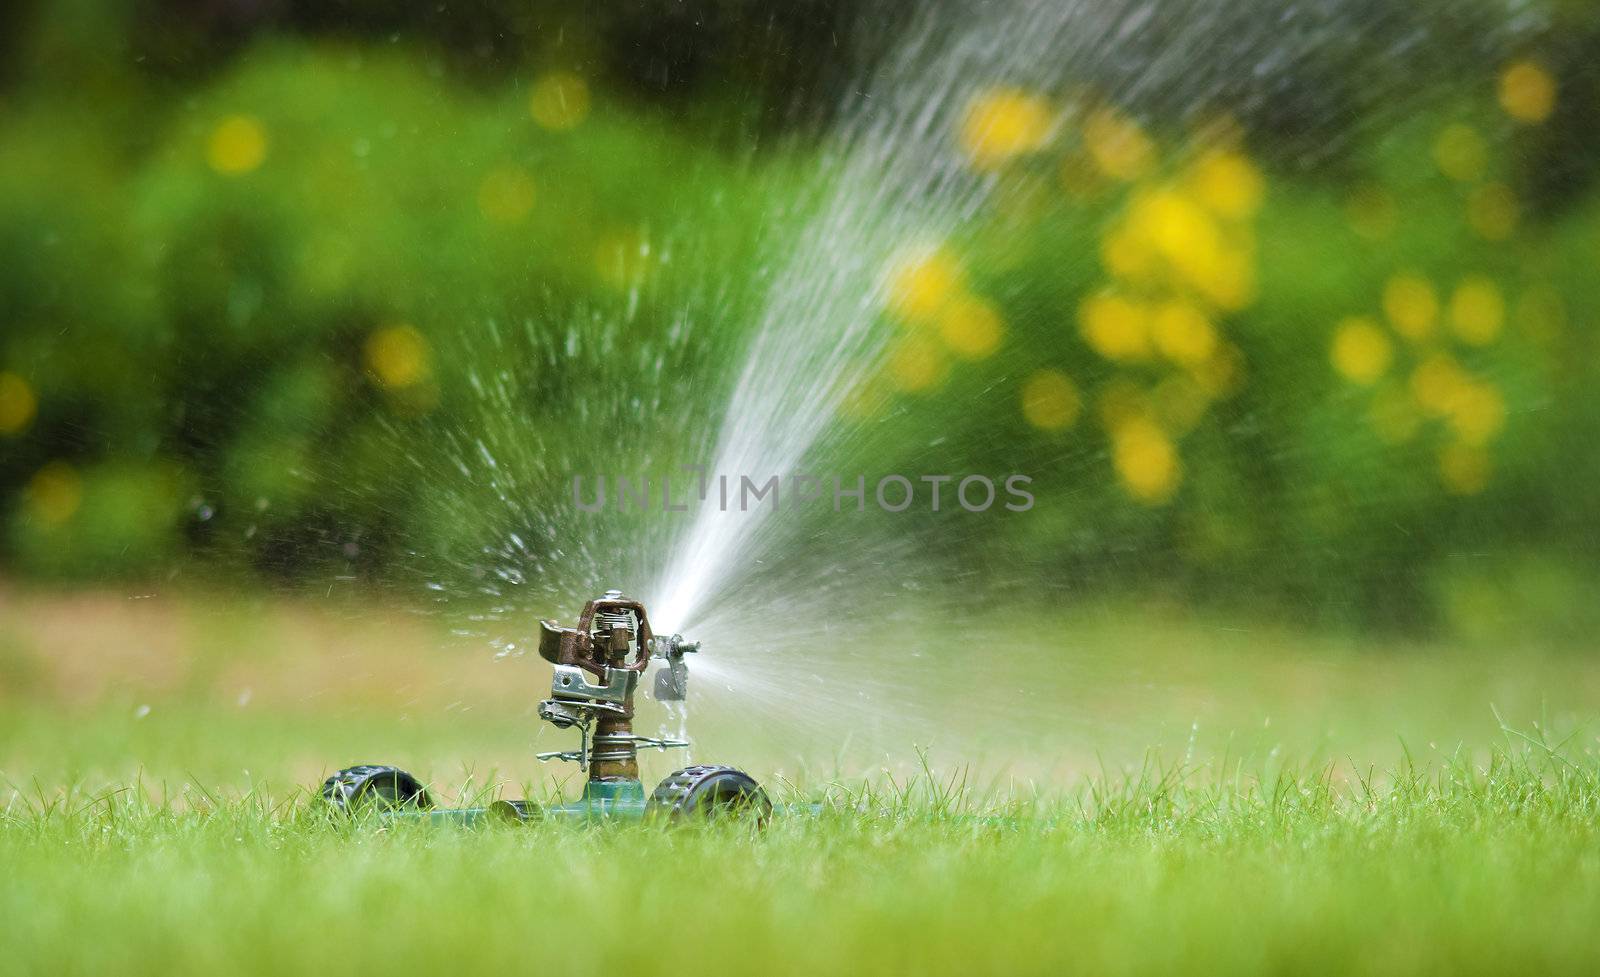 Sprinkler watering the lawn during the summer season